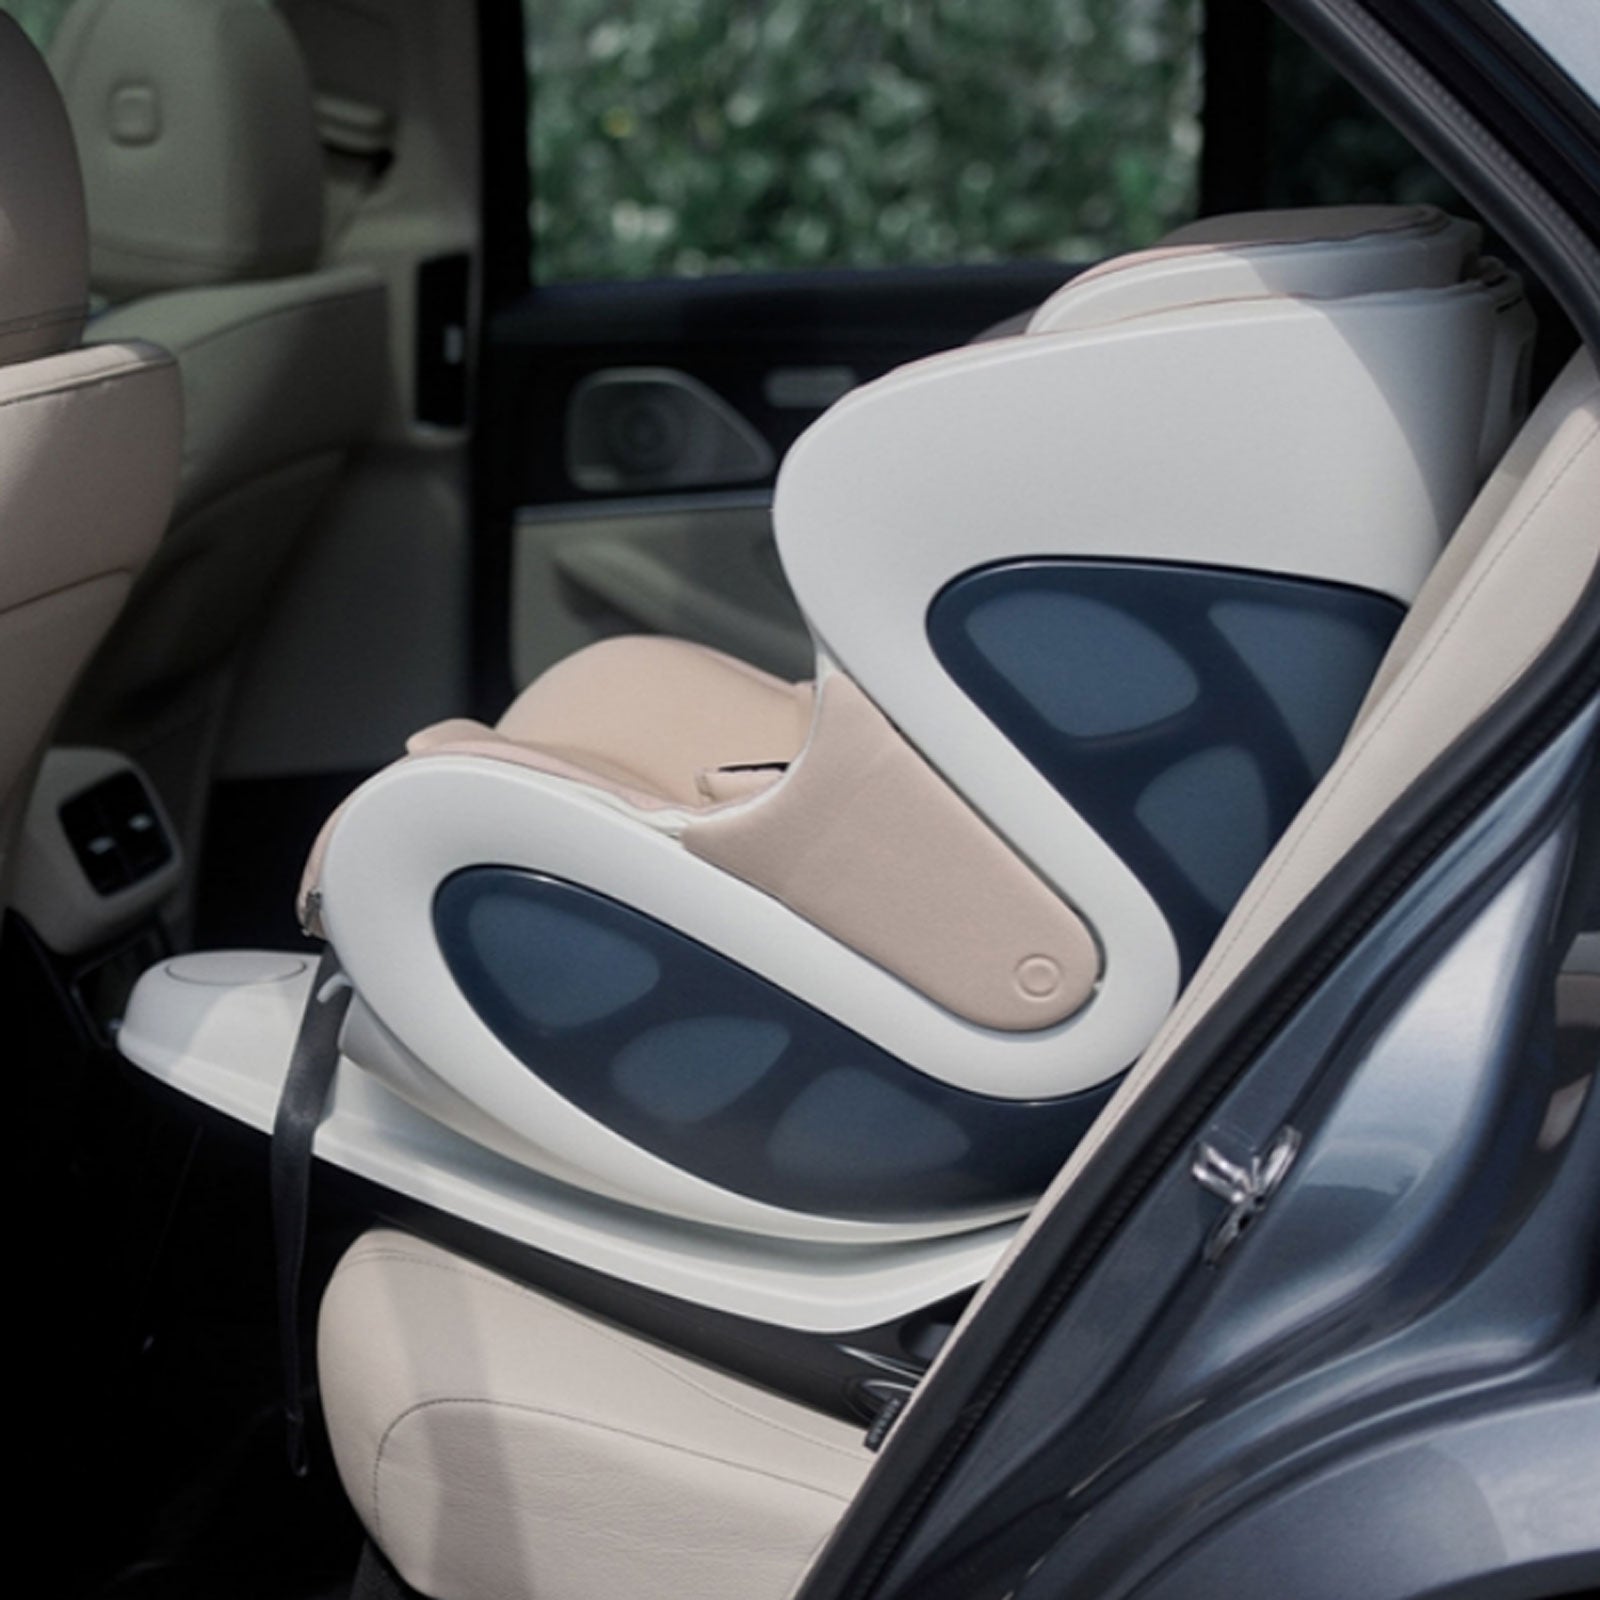 babyark Convertible Car Seat + Base - Moonlight Seat / Eggshell Base installed in vehicle